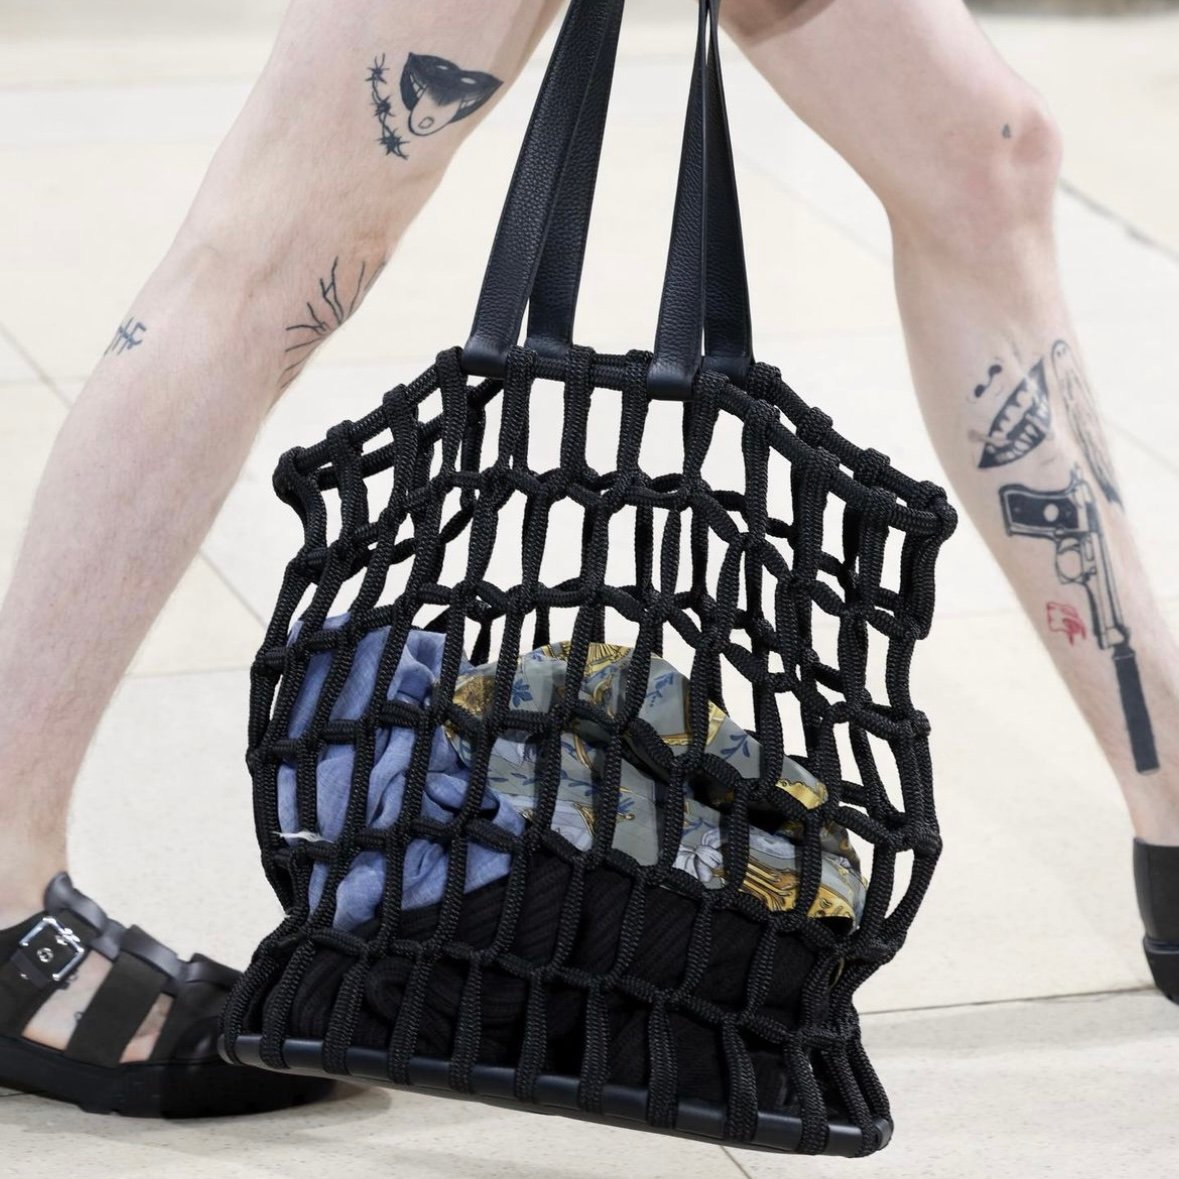 The hybrid Hermès bag where luxury and skateboarding meet